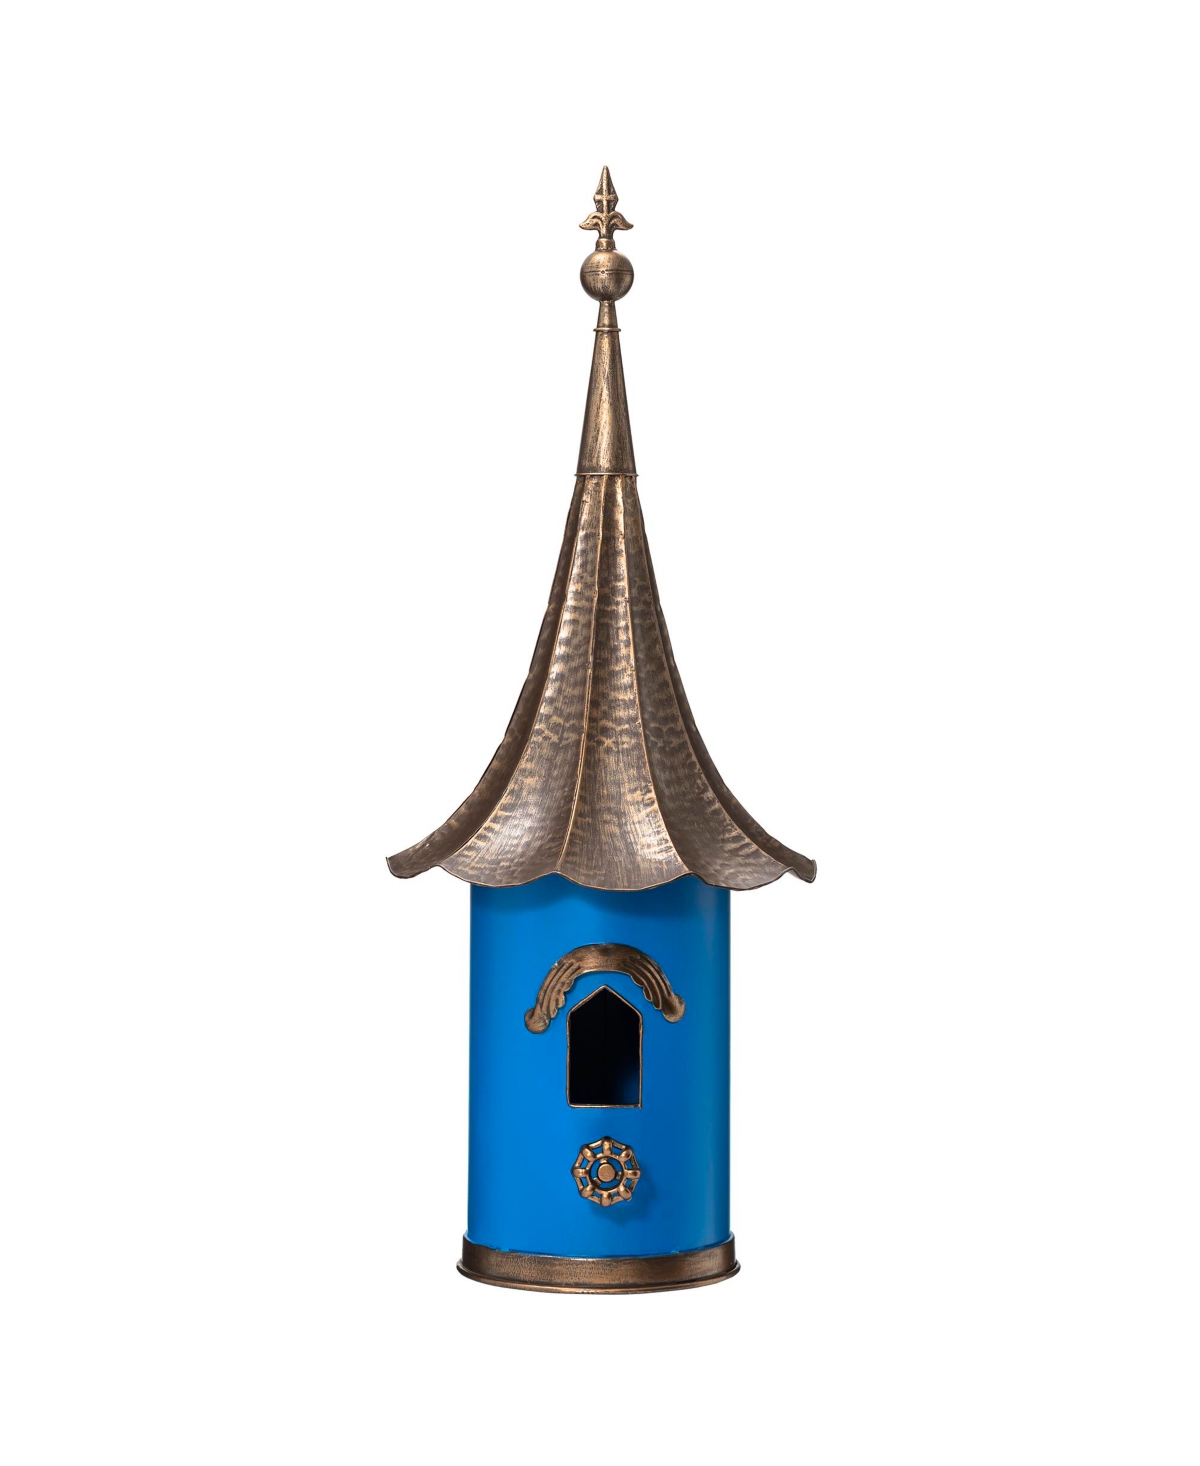 32" H Retro-Like Metal Pagoda Birdhouse with Bronze Roof - Blue